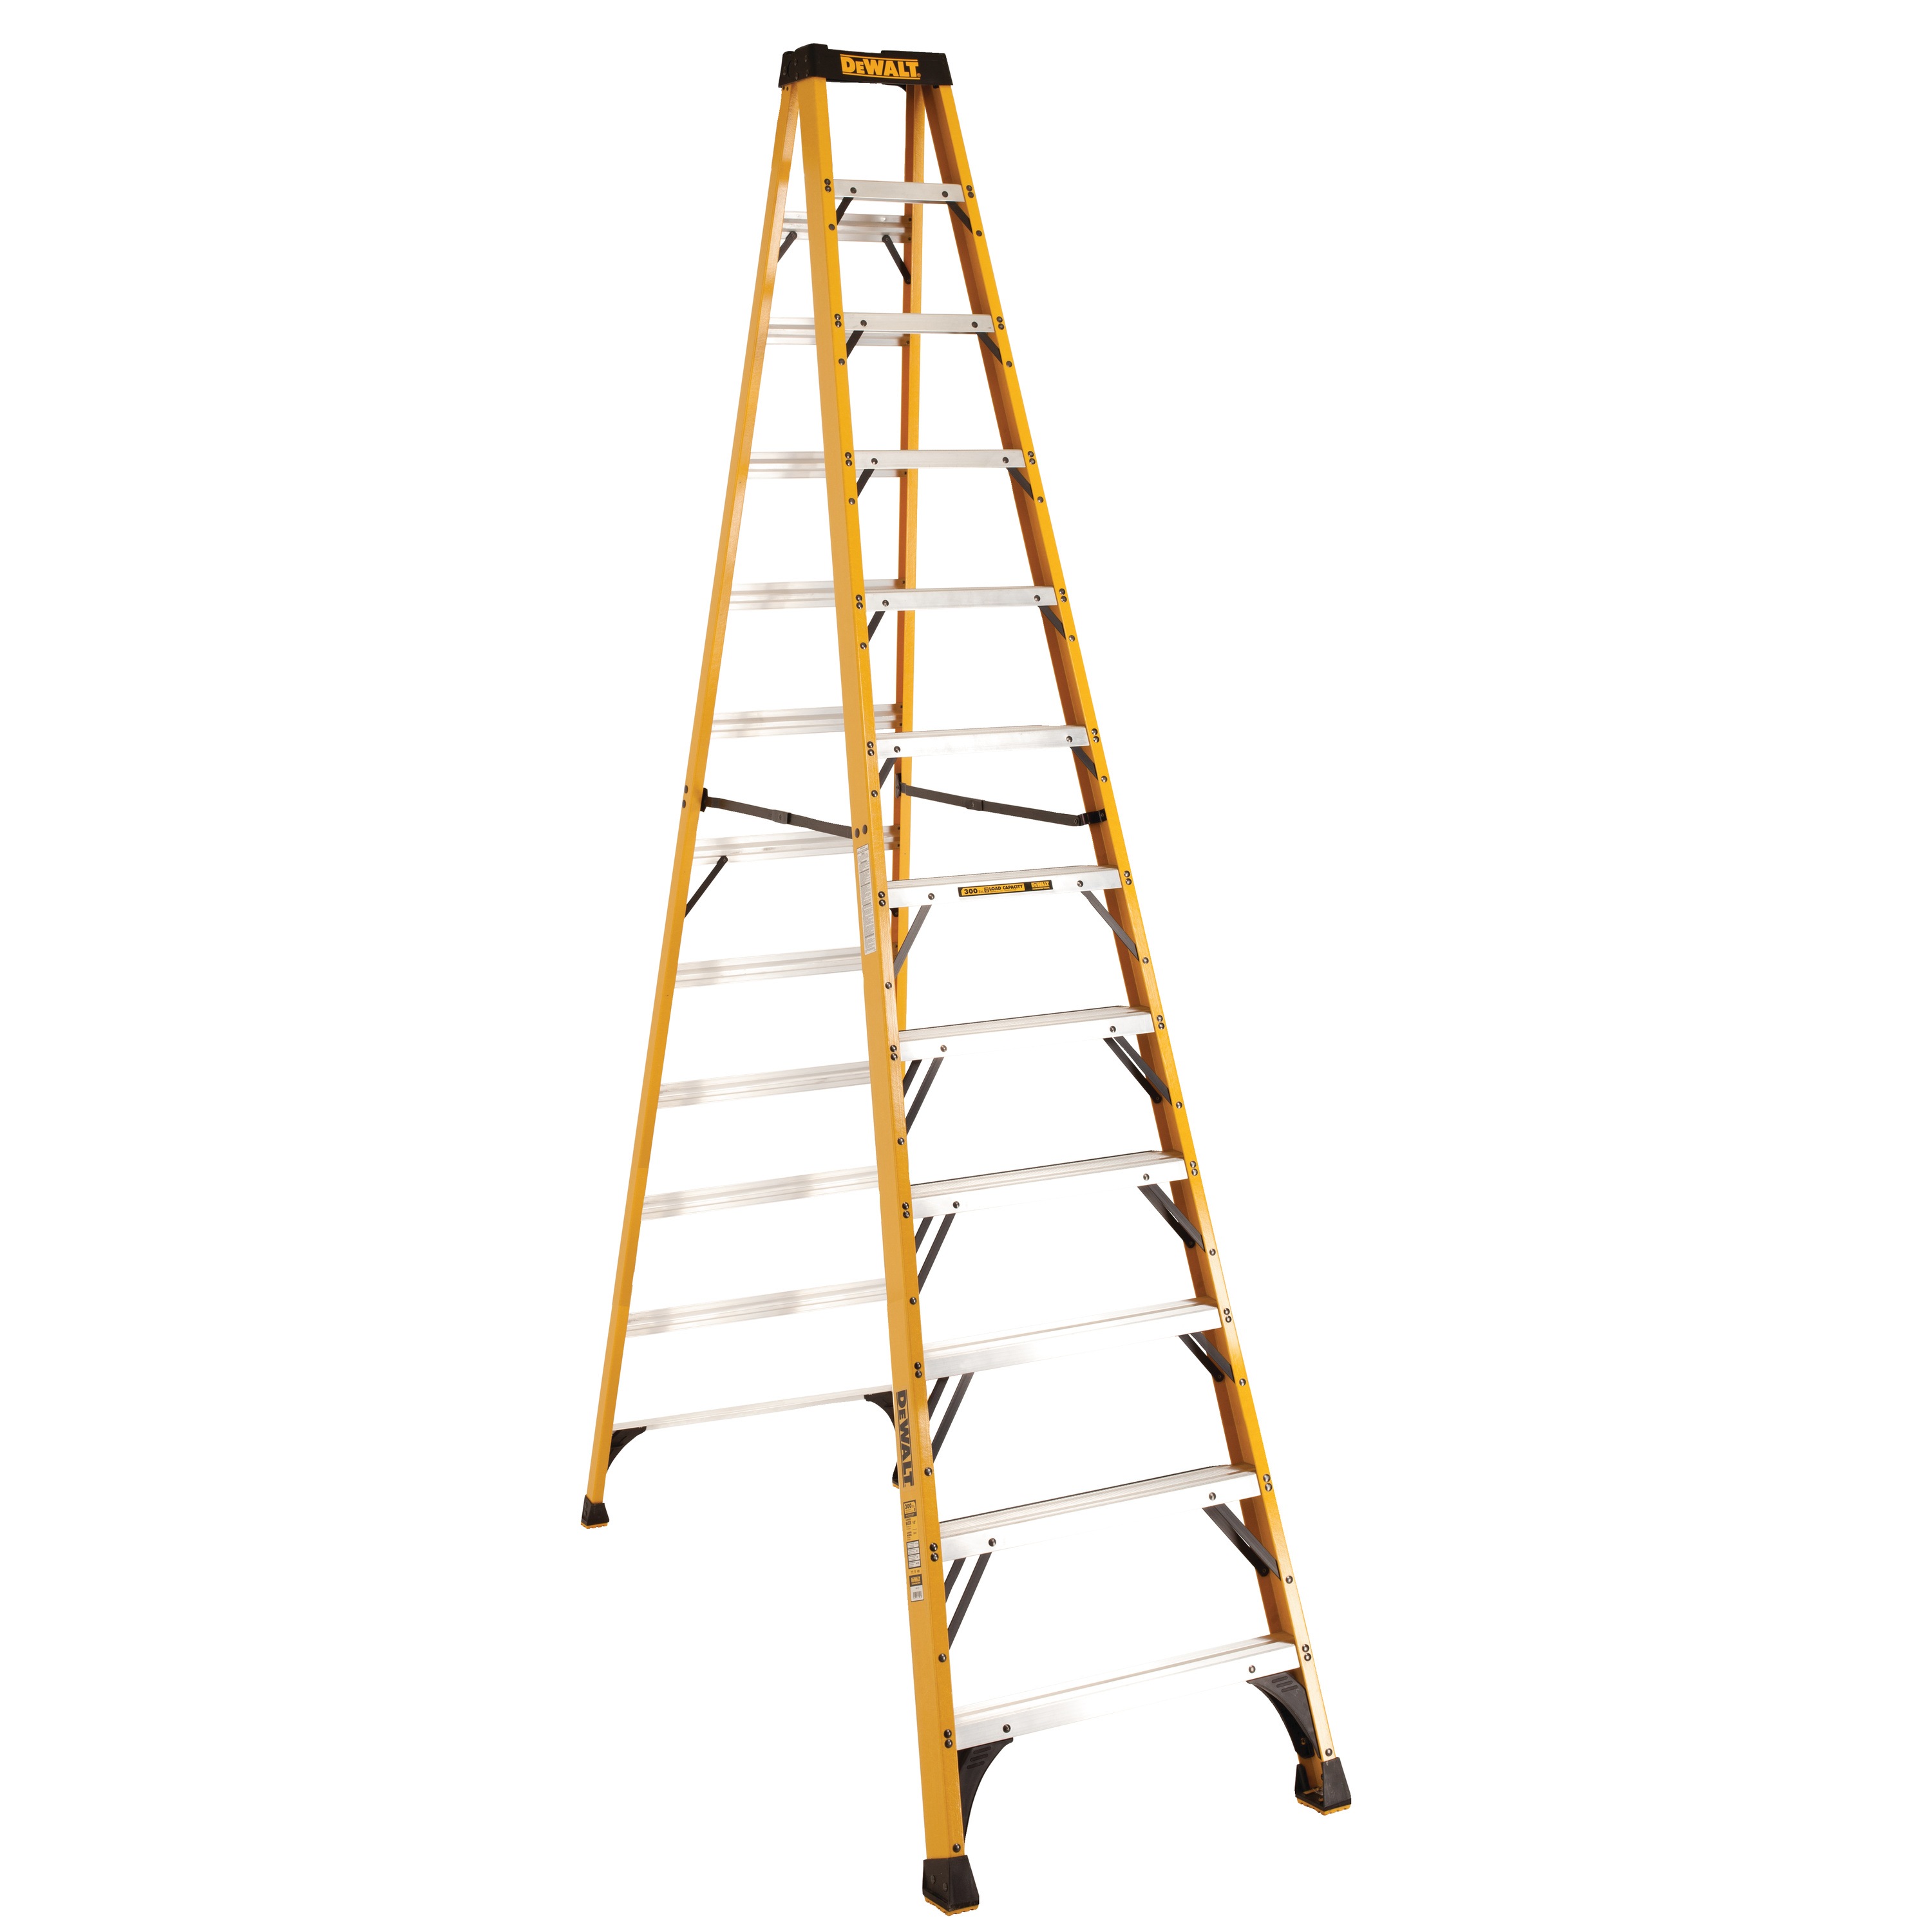 12 foot Fiberglass Step Ladder 300 pound Load Capacity.